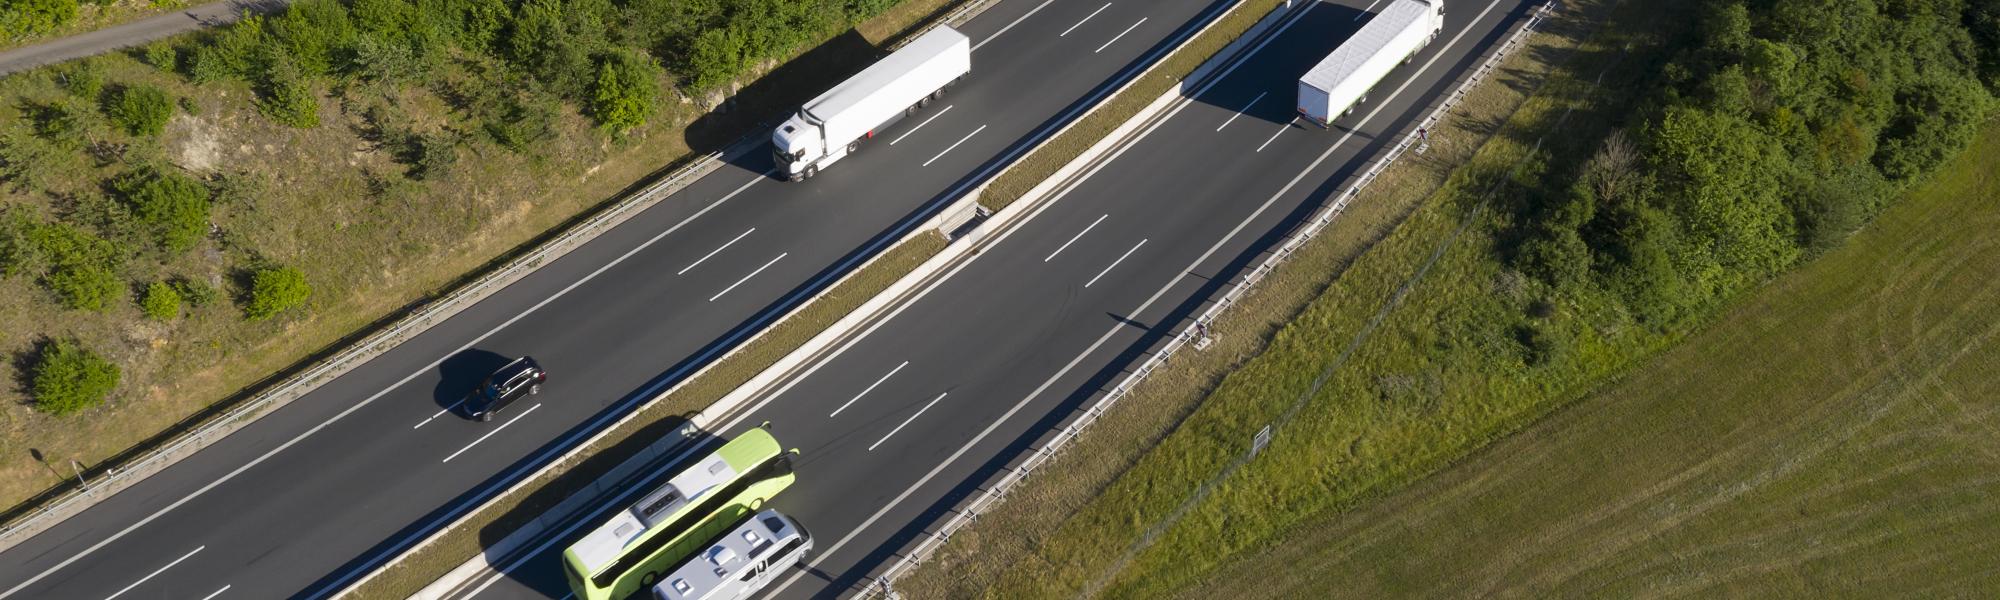 EU Greening Transport Package: IRU warns against rushed action